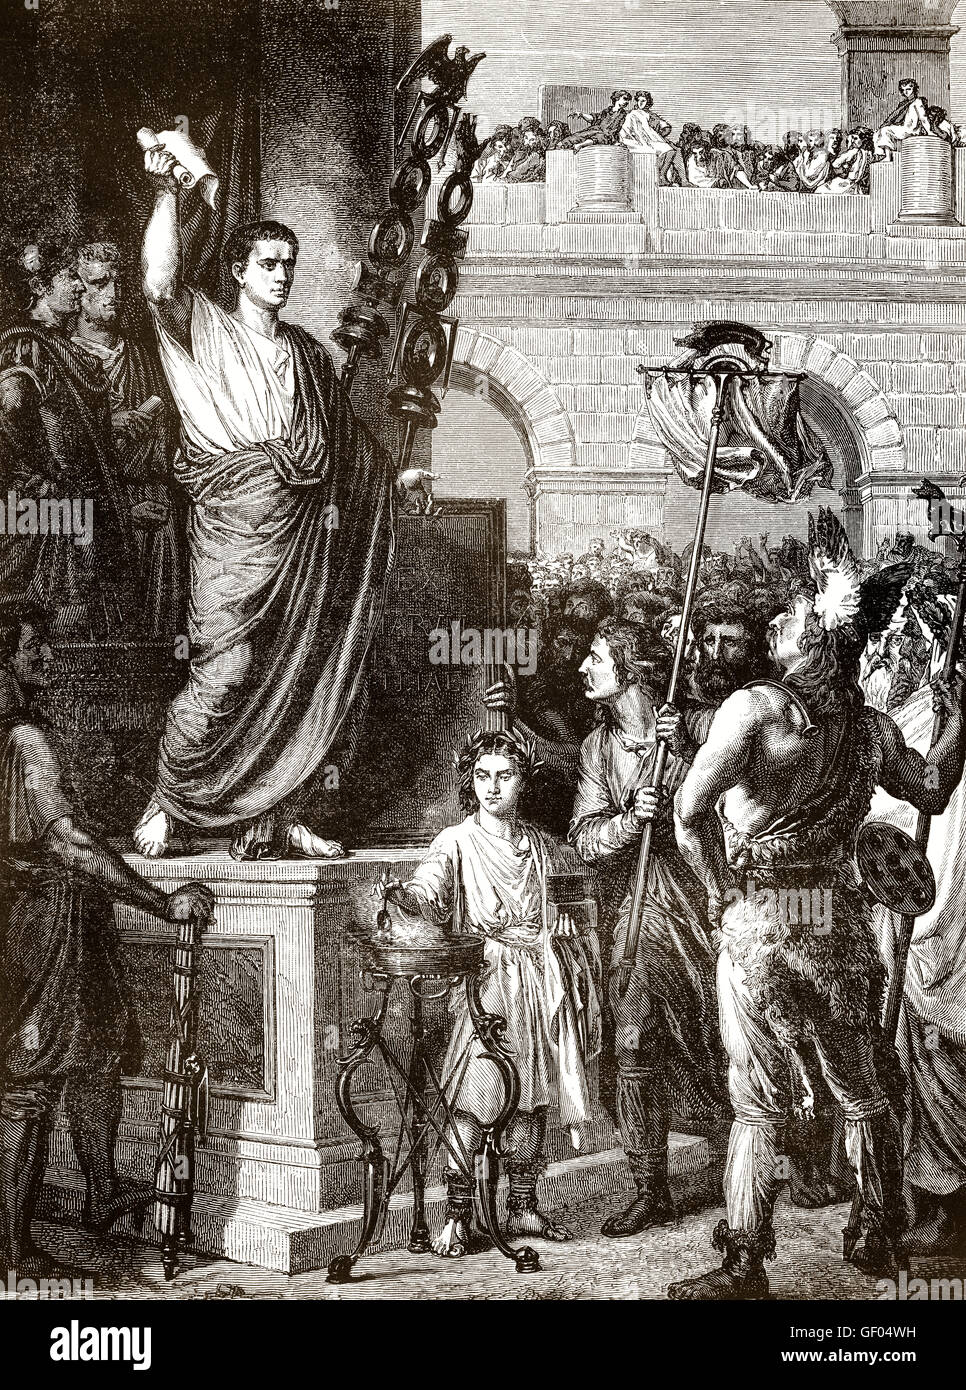 Roman Emperor Claudius oder Tiberius Claudius Caesar Augustus Germanicus, erklärt Lyon die Hauptstadt Galliens, 1. Jahrhundert Stockfoto